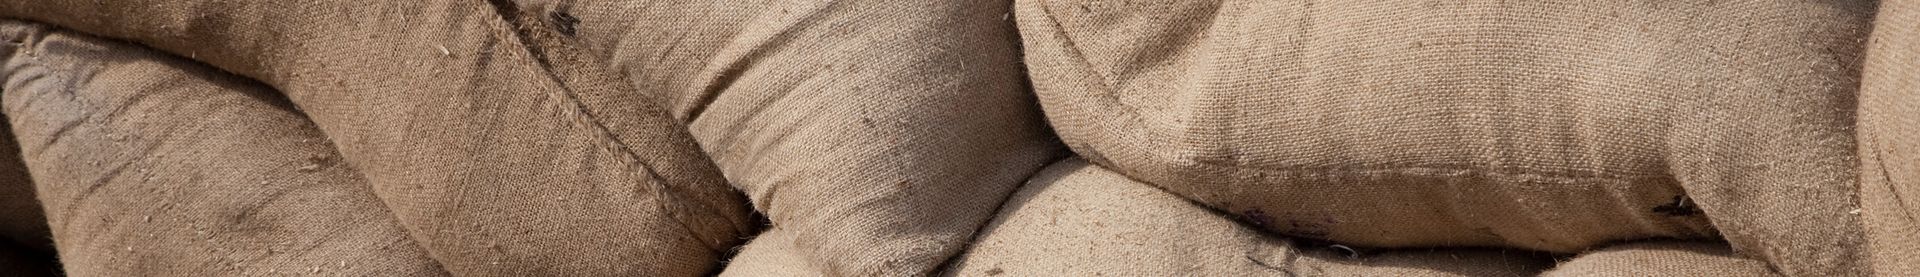 Close-up of Burlap Sandbags